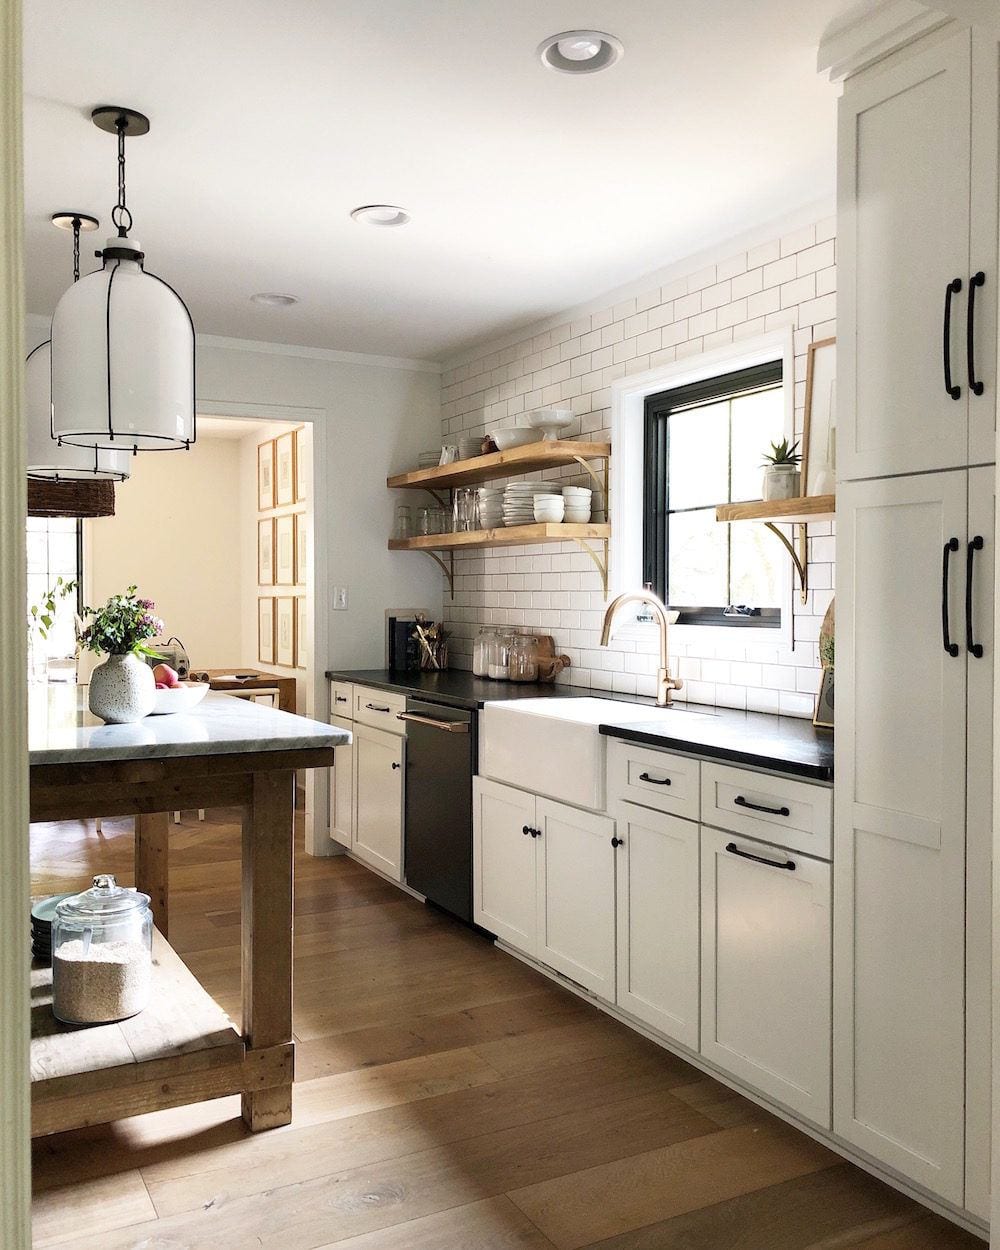 house seven design - stunning black and white kitchen